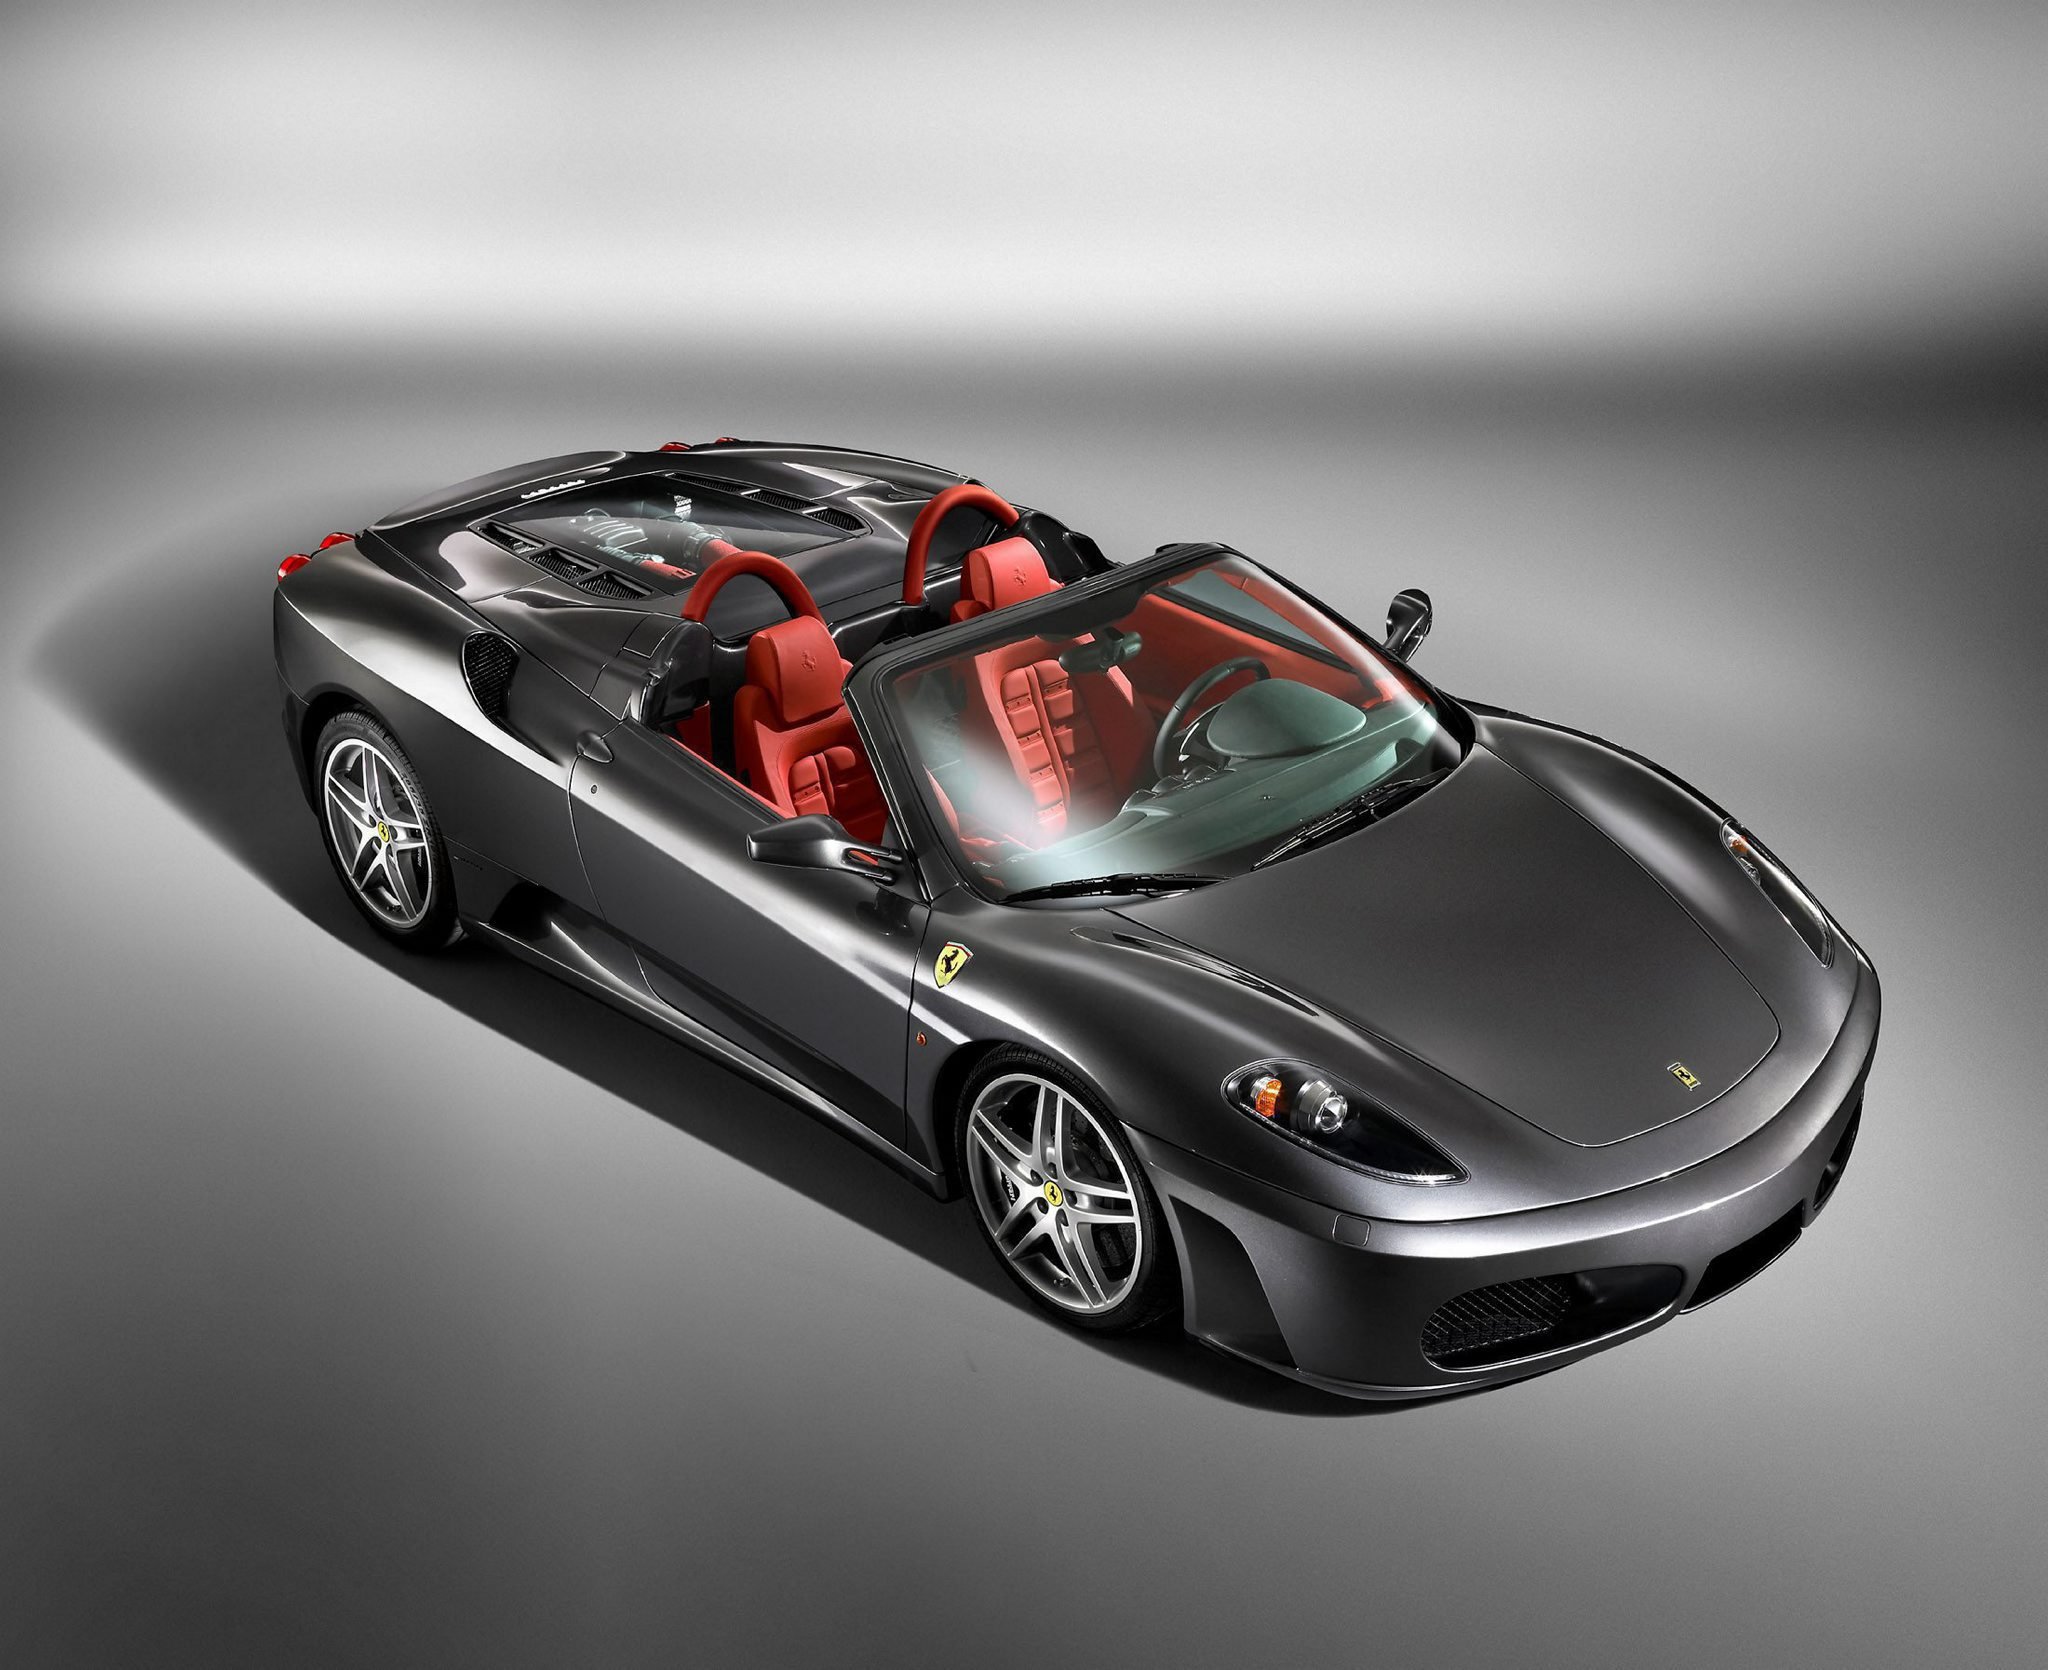 The Ferrari Spider is estimated to cost around $170,045